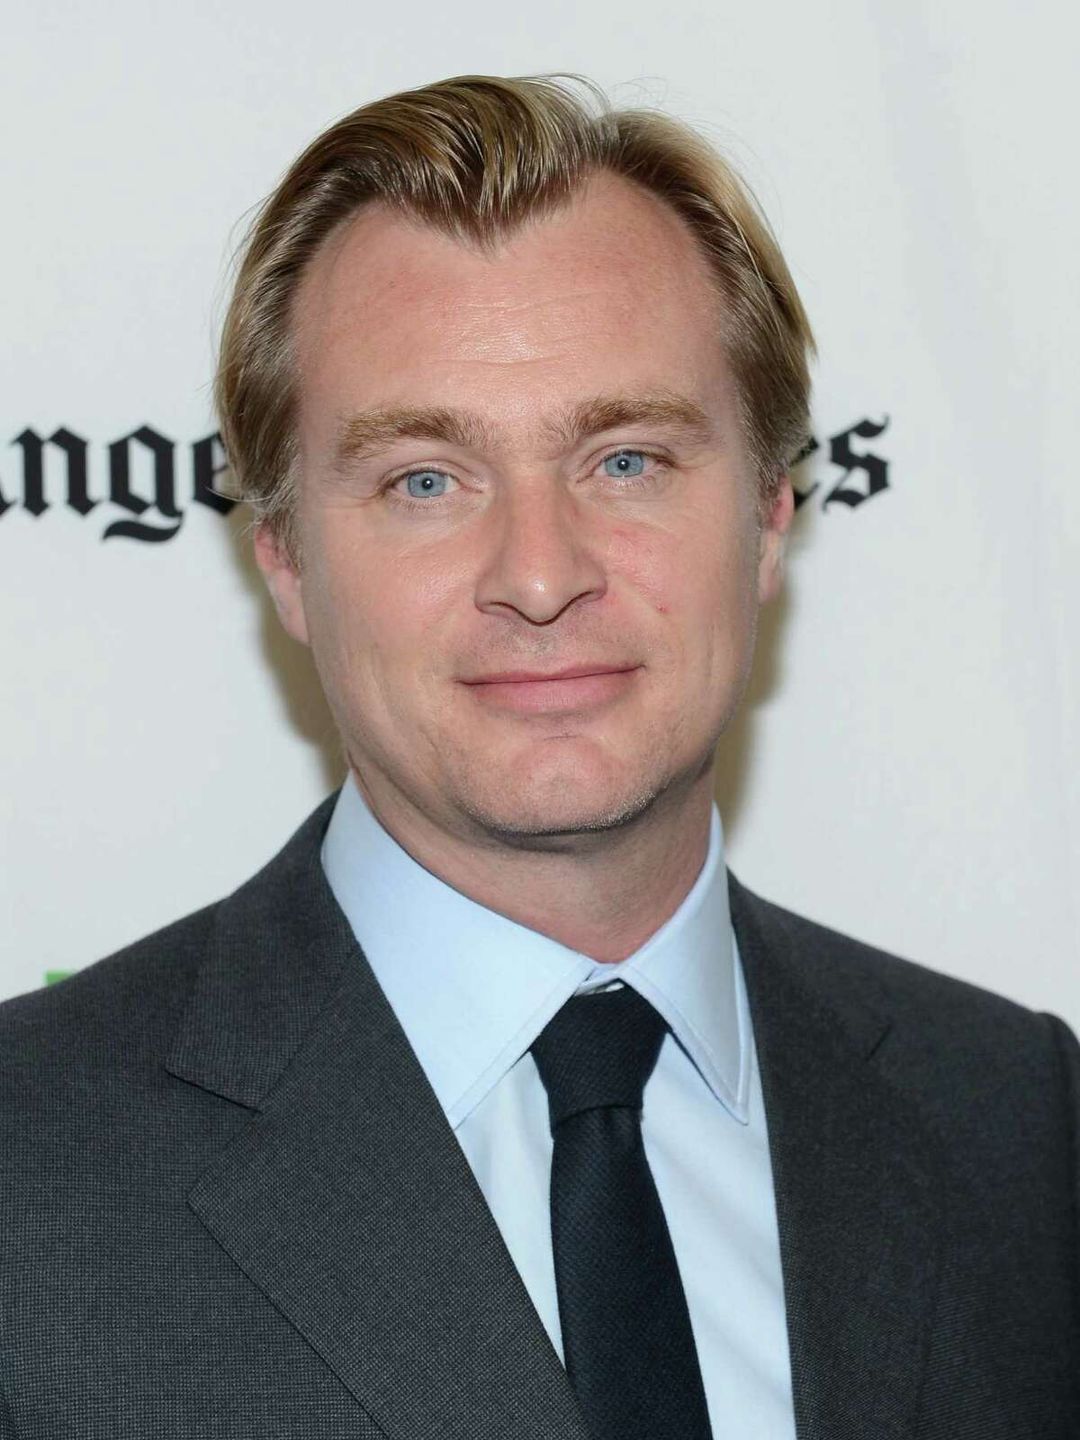 Christopher Nolan age